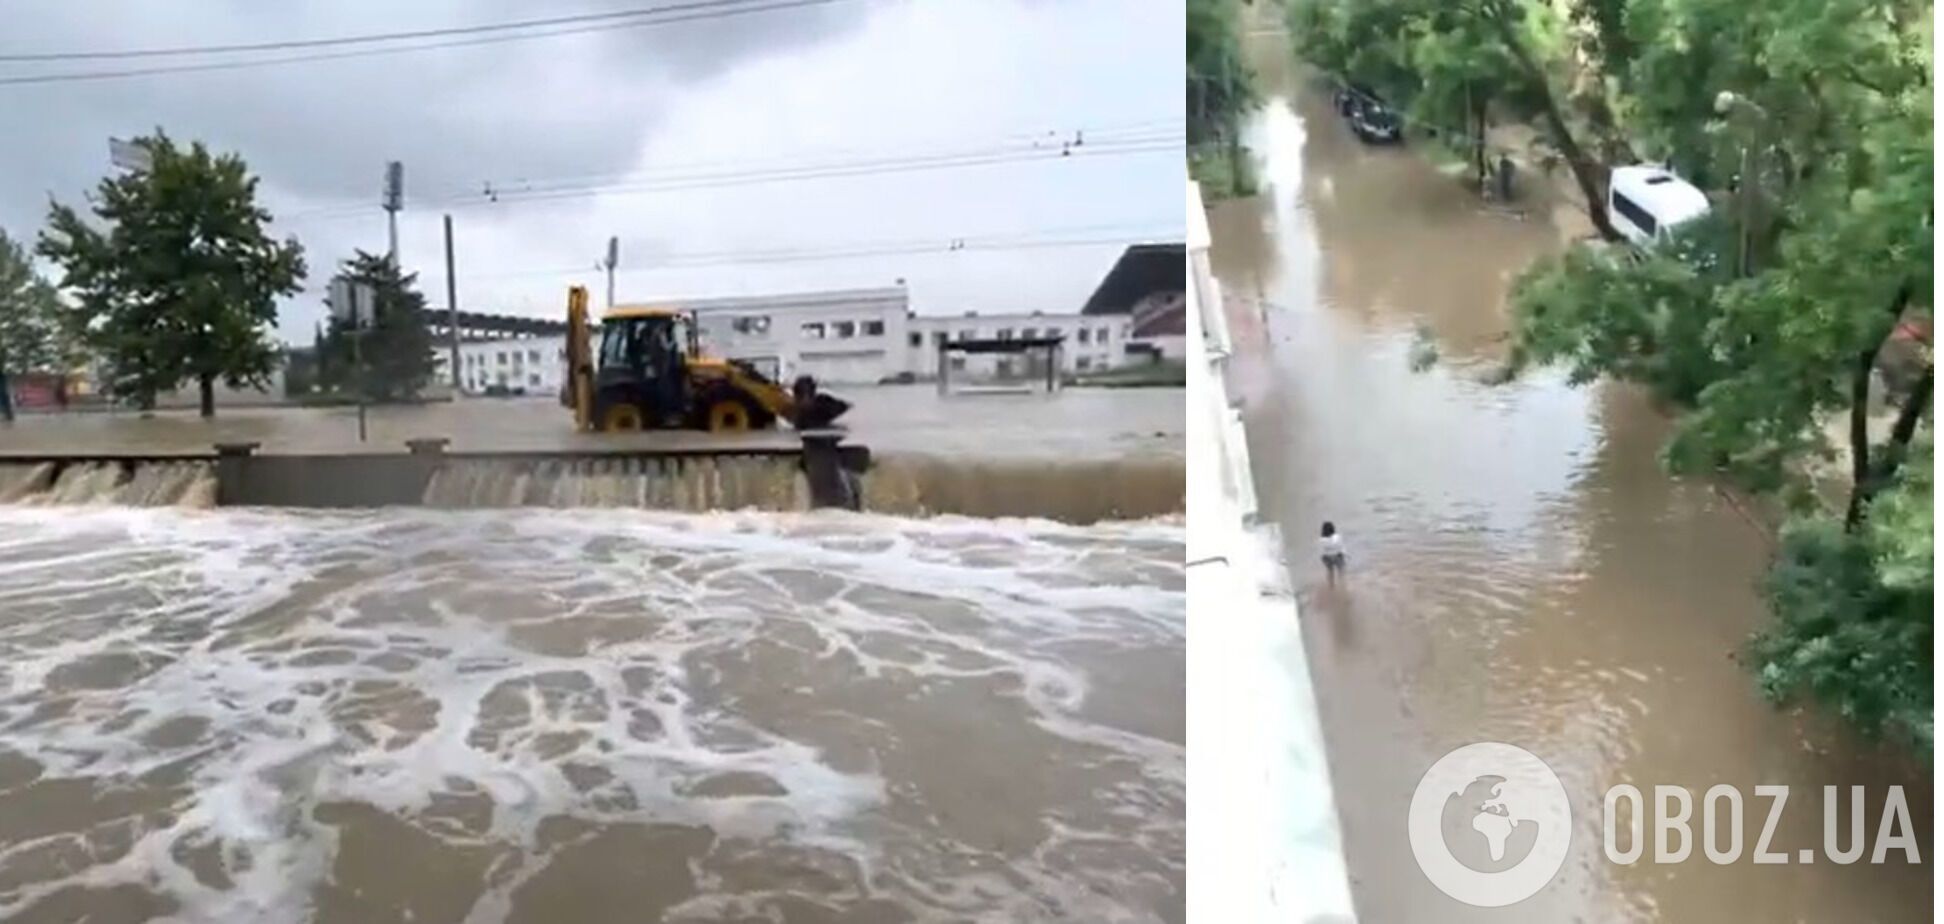 "Потоп" в Керчи